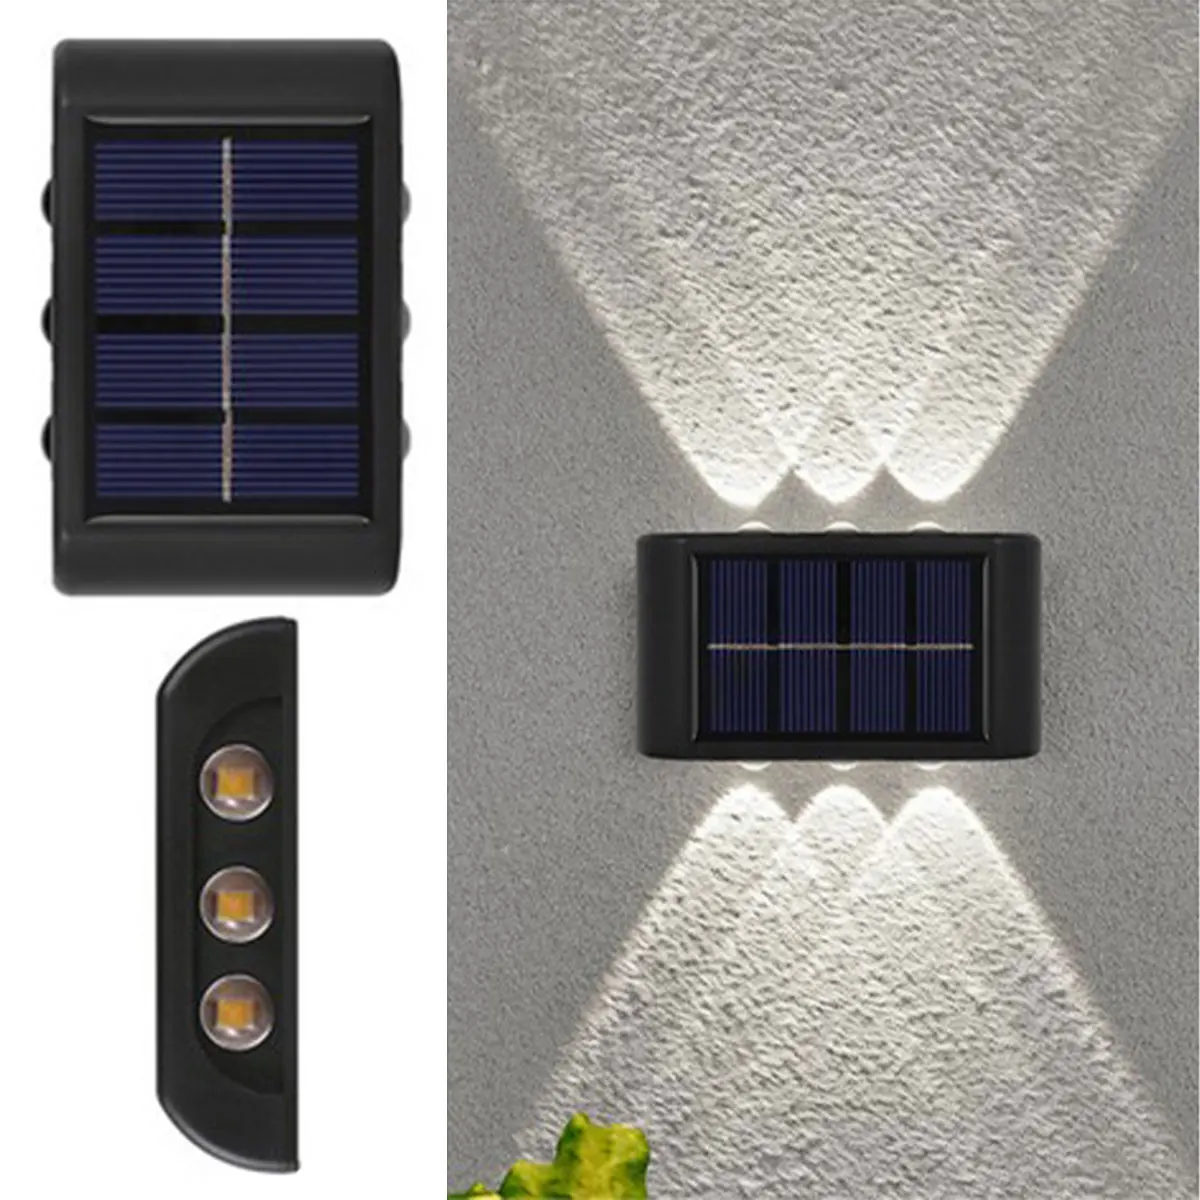 6 LED solar light outdoor lighting wall washer led light wall decor porch light external sconce solar light solar led street light